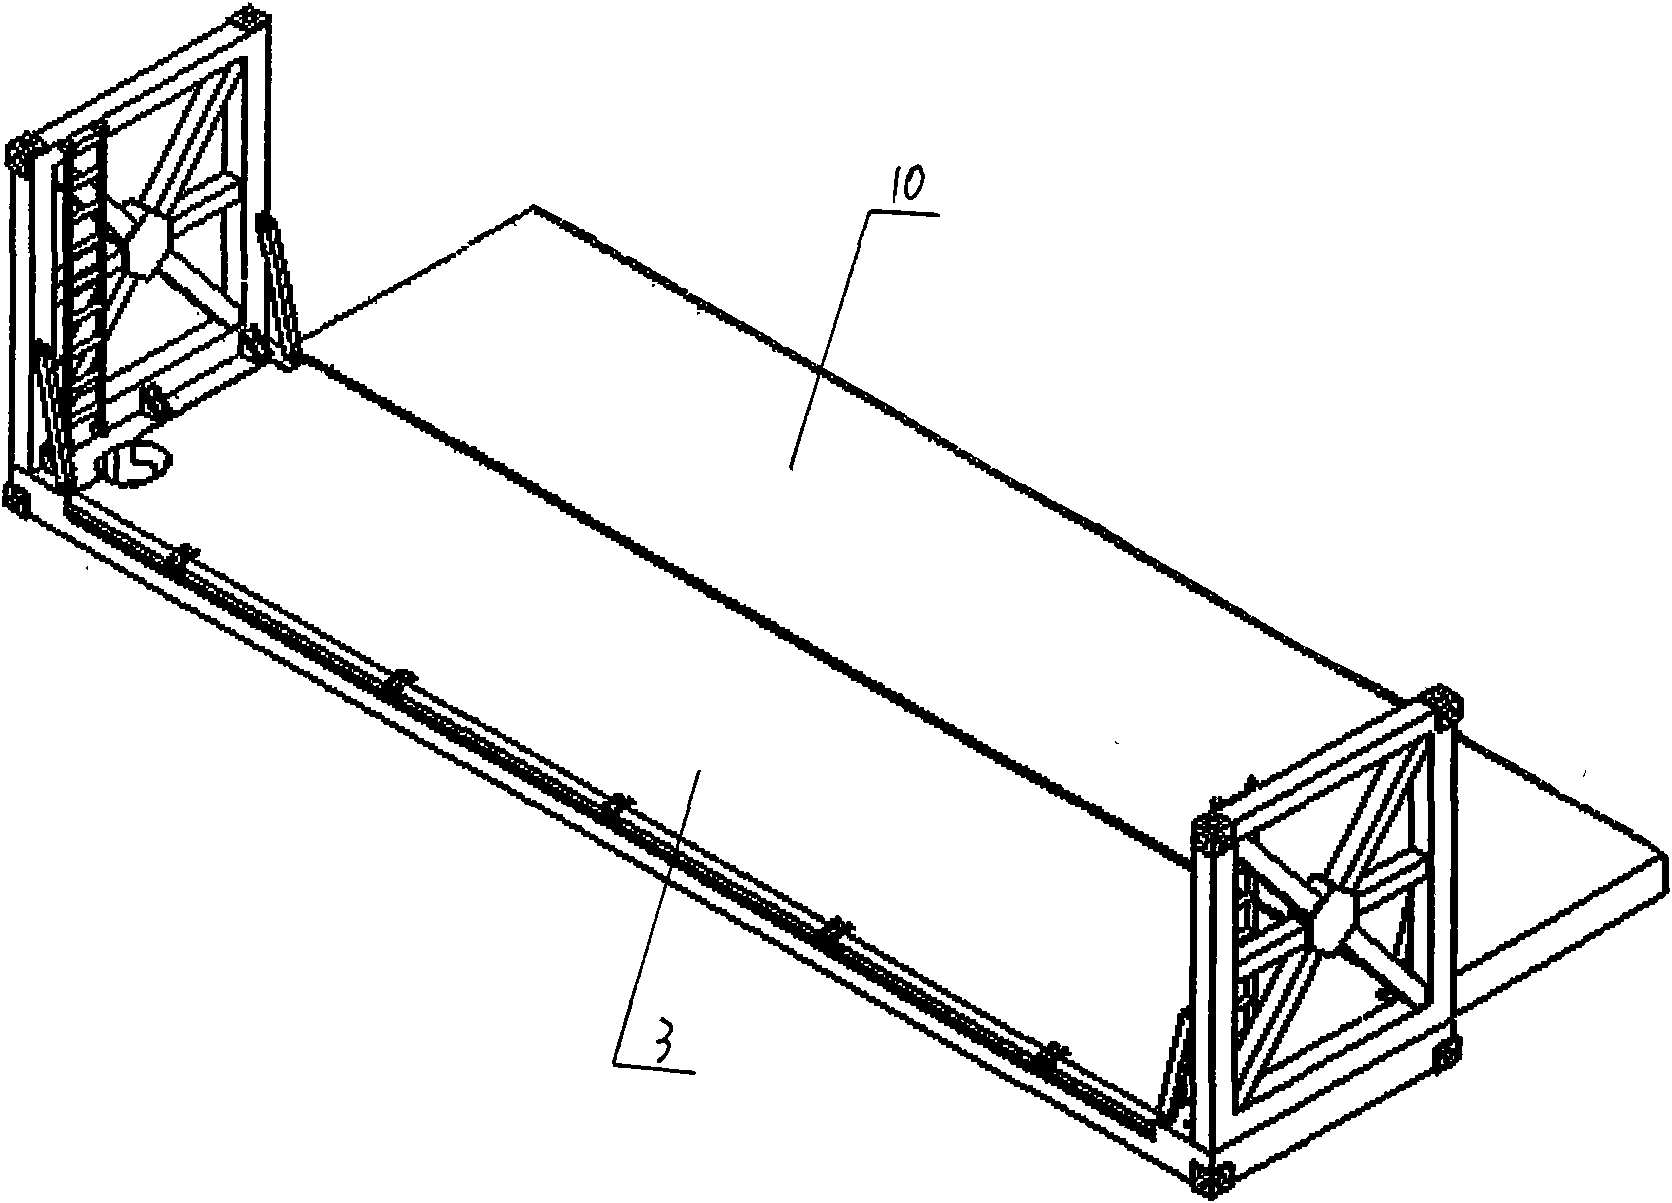 Multi-layer loading platform